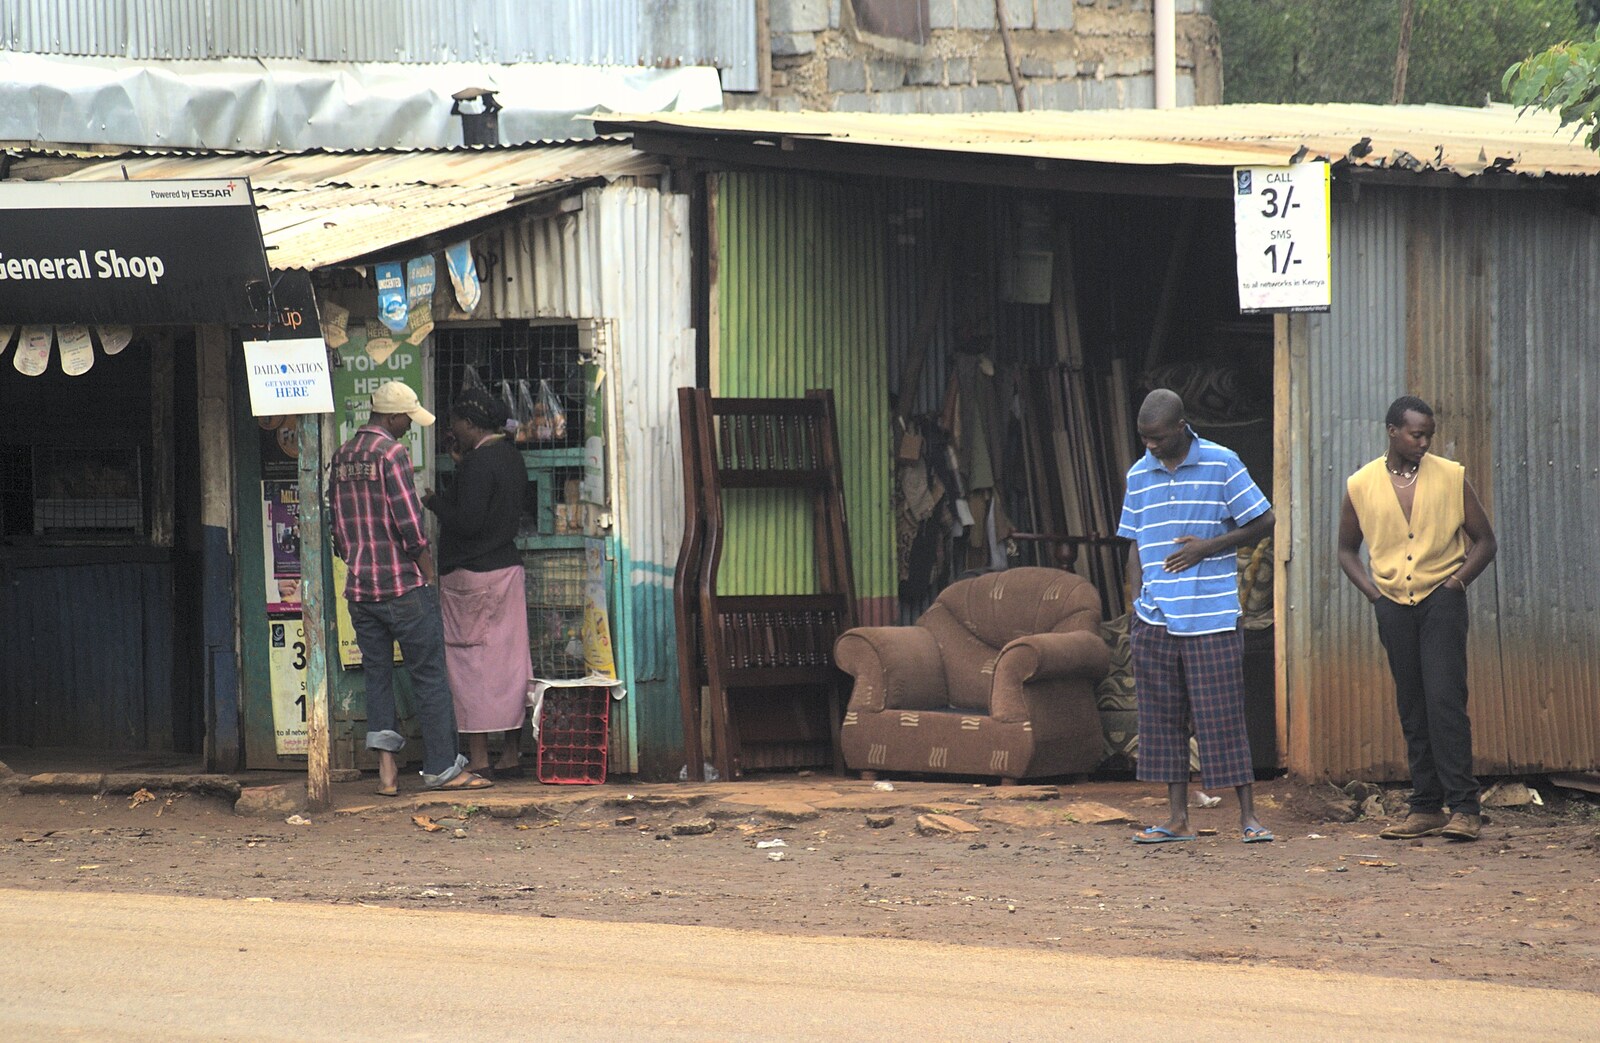 An armchair on the street from Nairobi and the Road to Maasai Mara, Kenya, Africa - 1st November 2010